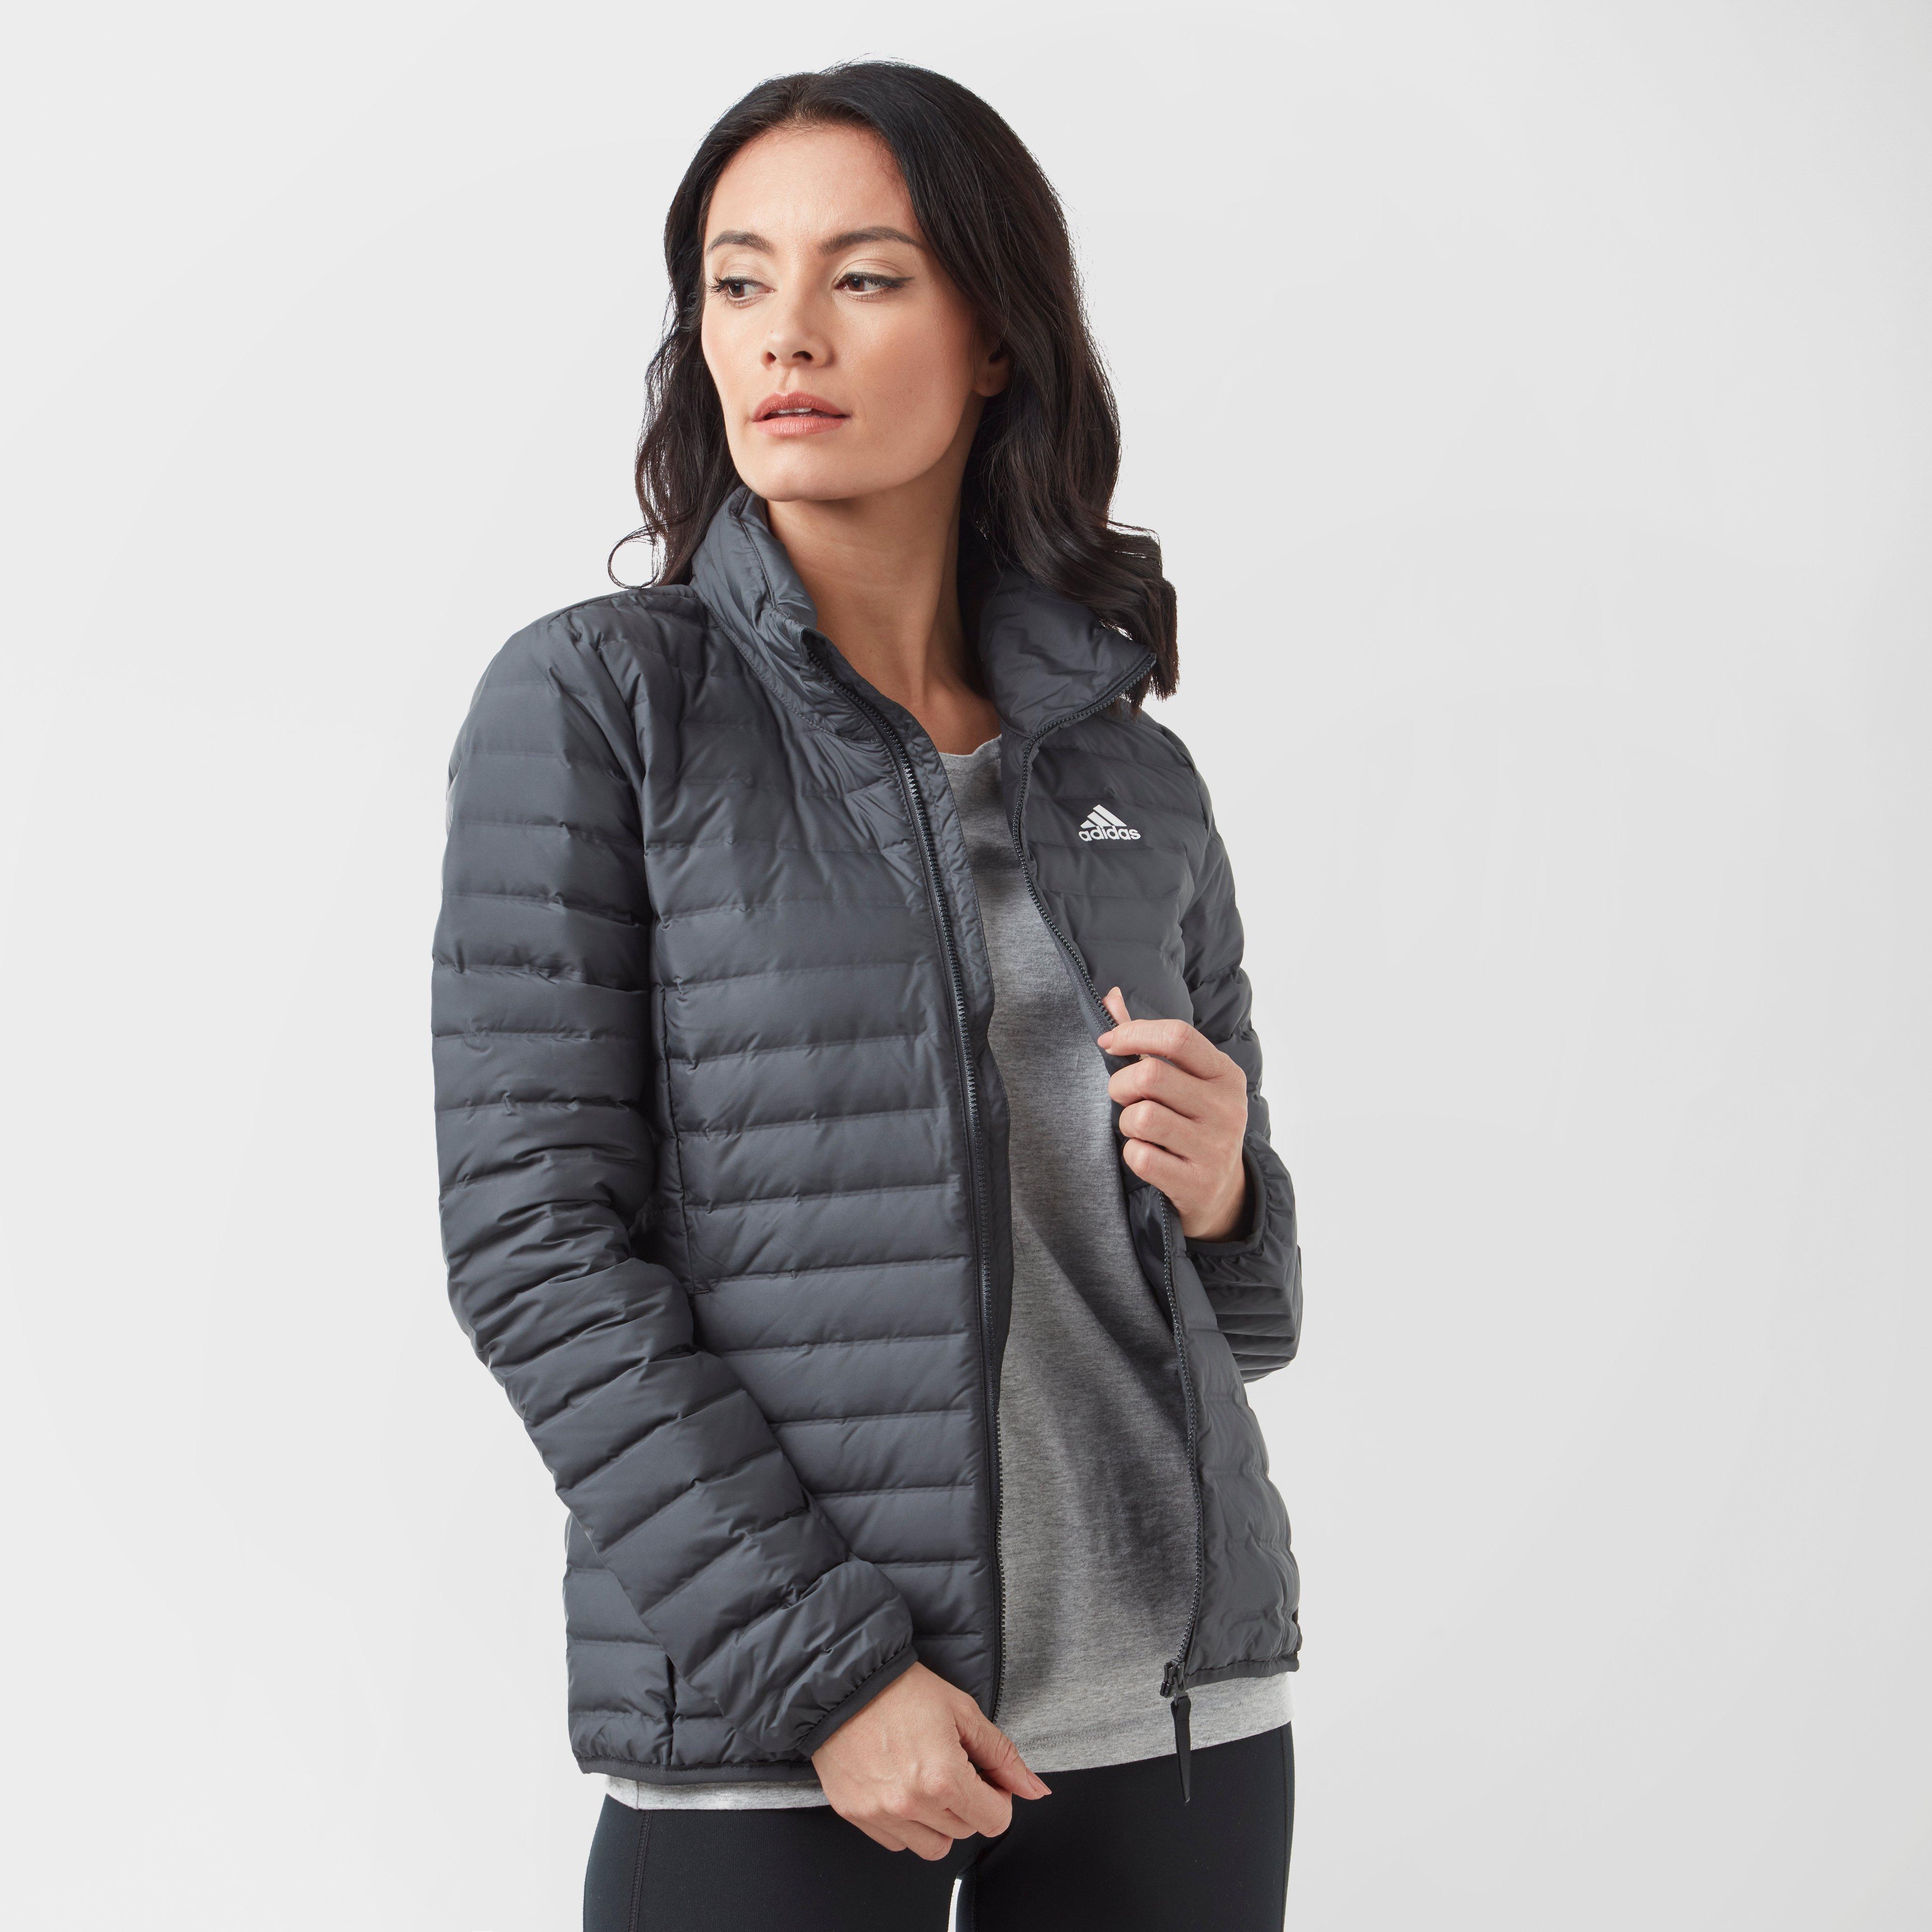 Adidas Varilite Down Jacket – Women’s | Compare outdoor jacket prices ...